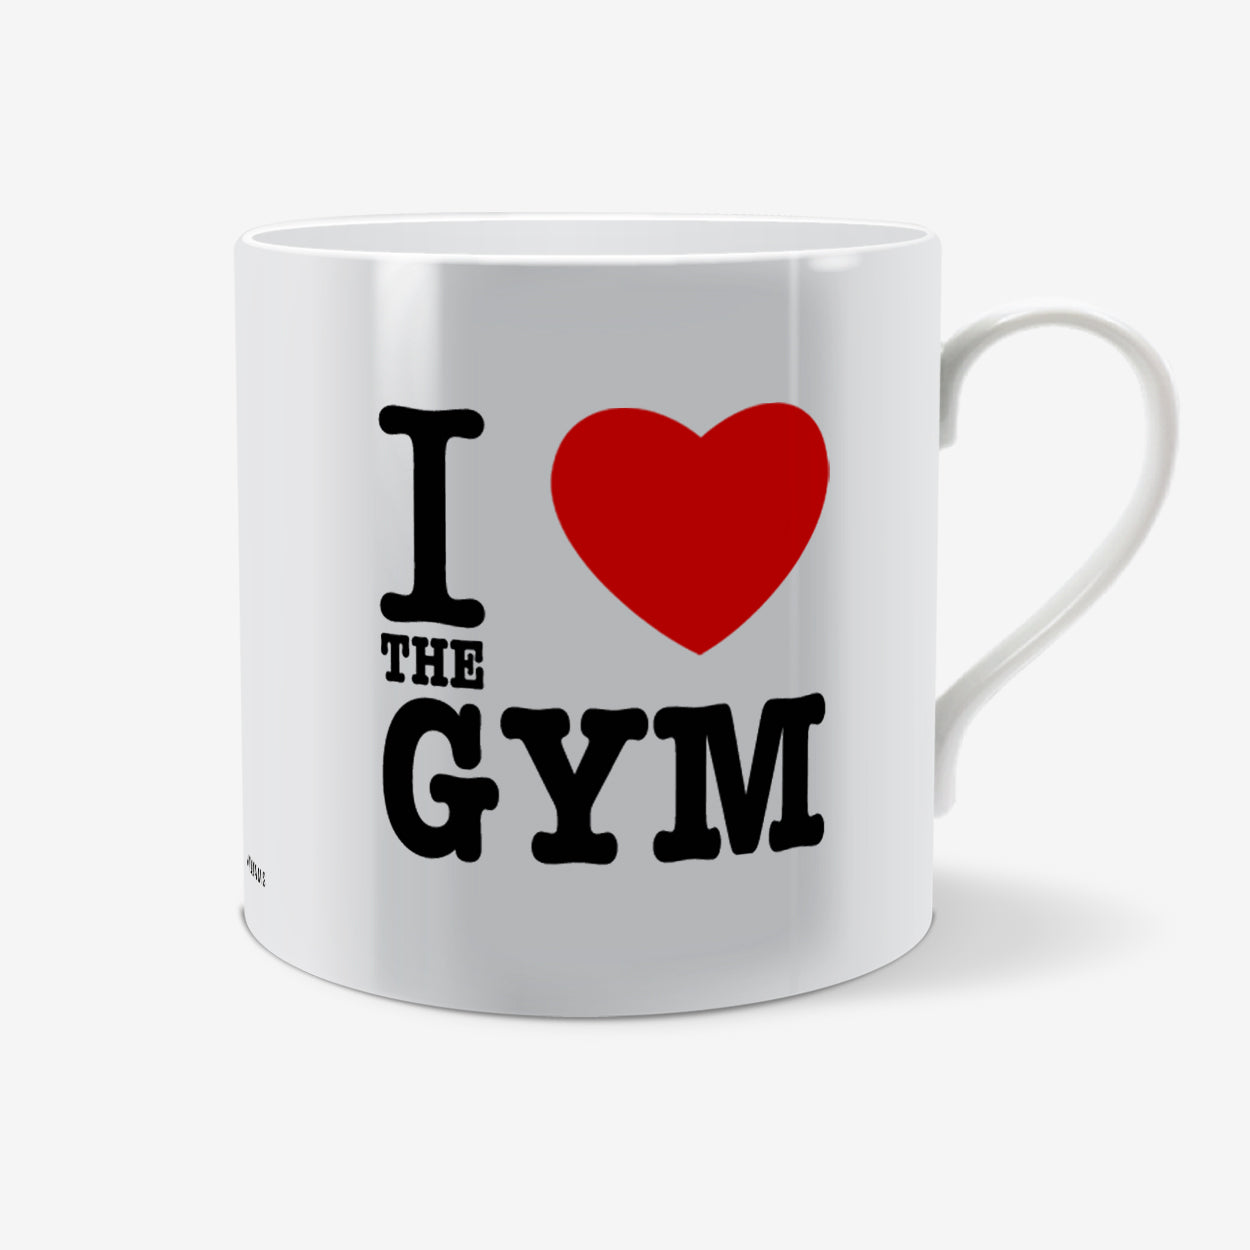 I Love the Gym Fun Mug - Red